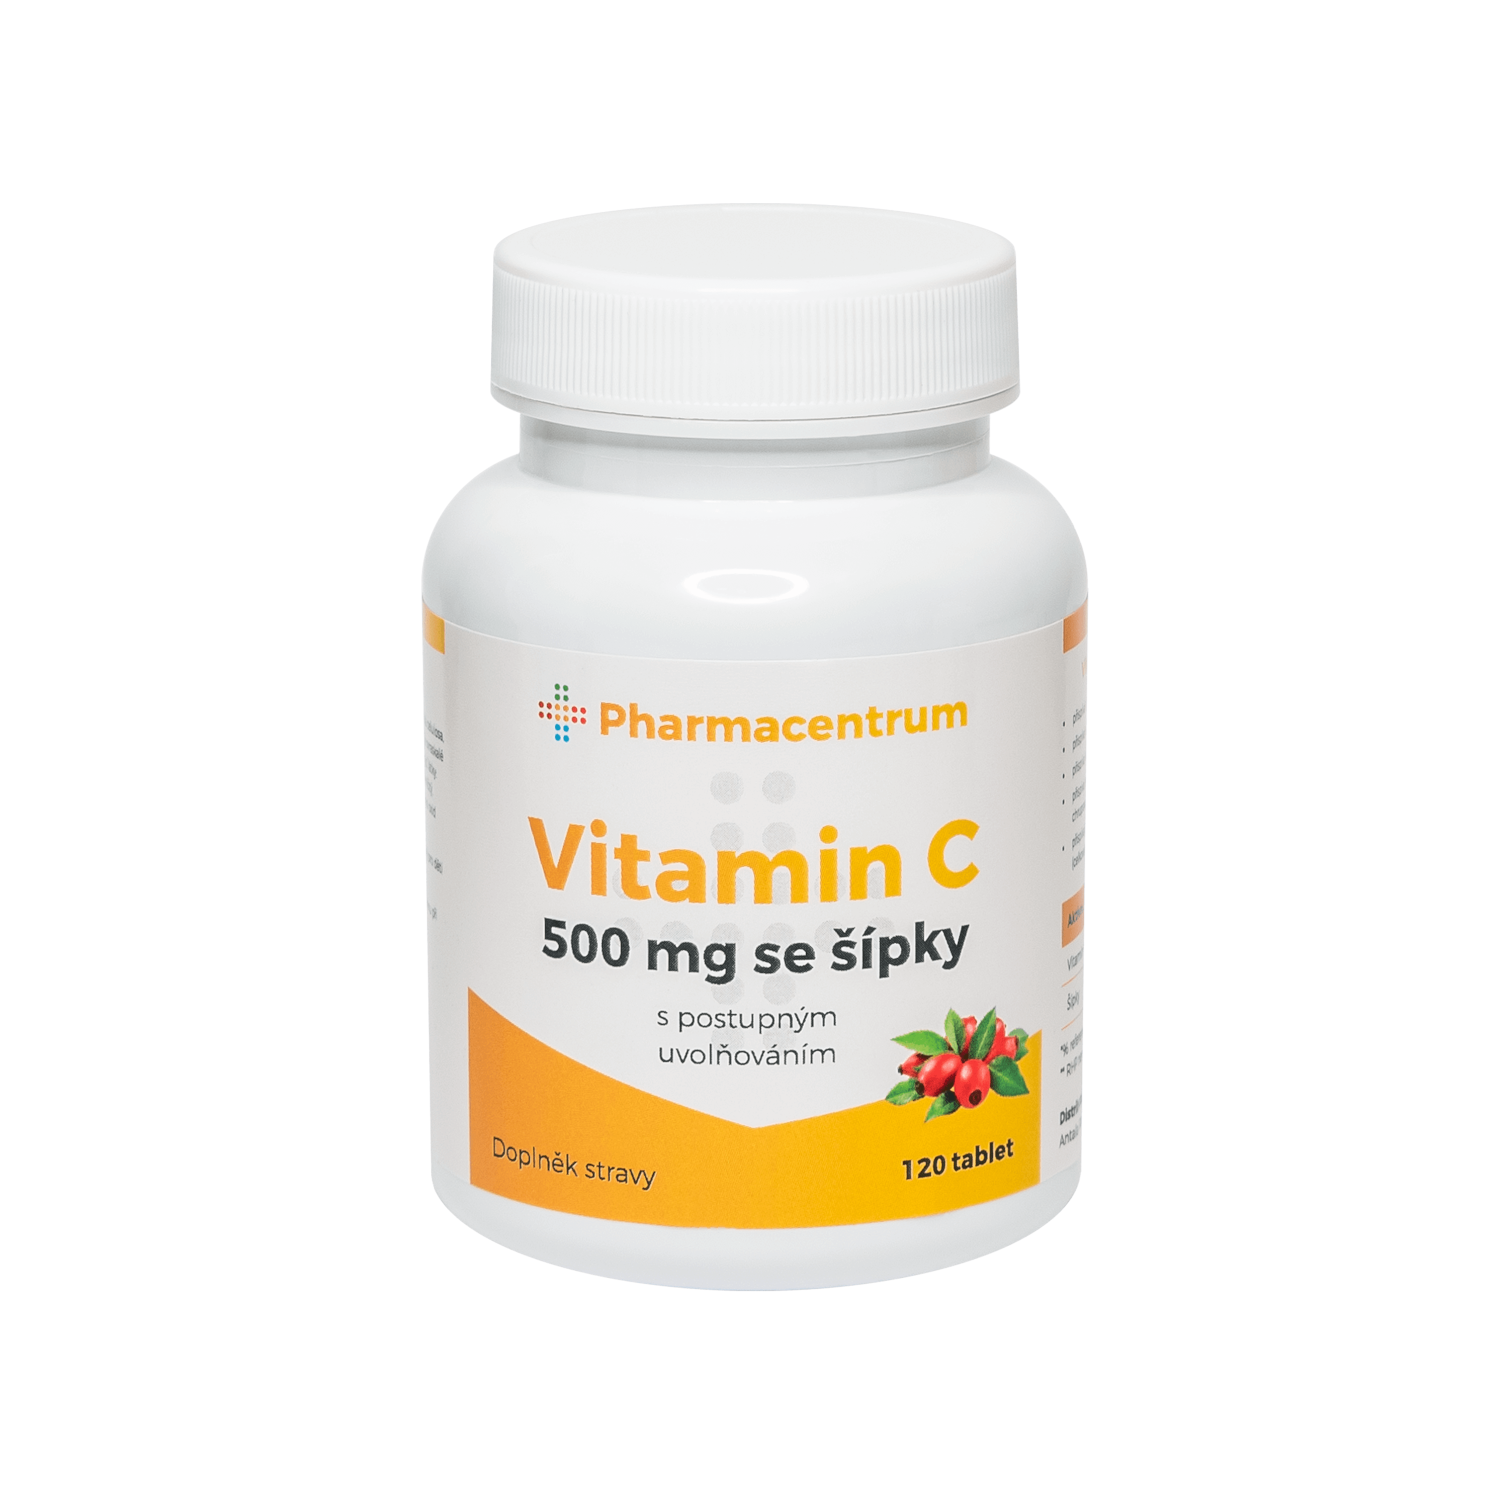 Pharmacentrum Vitamin C 500 mg se šípky 120 tablet